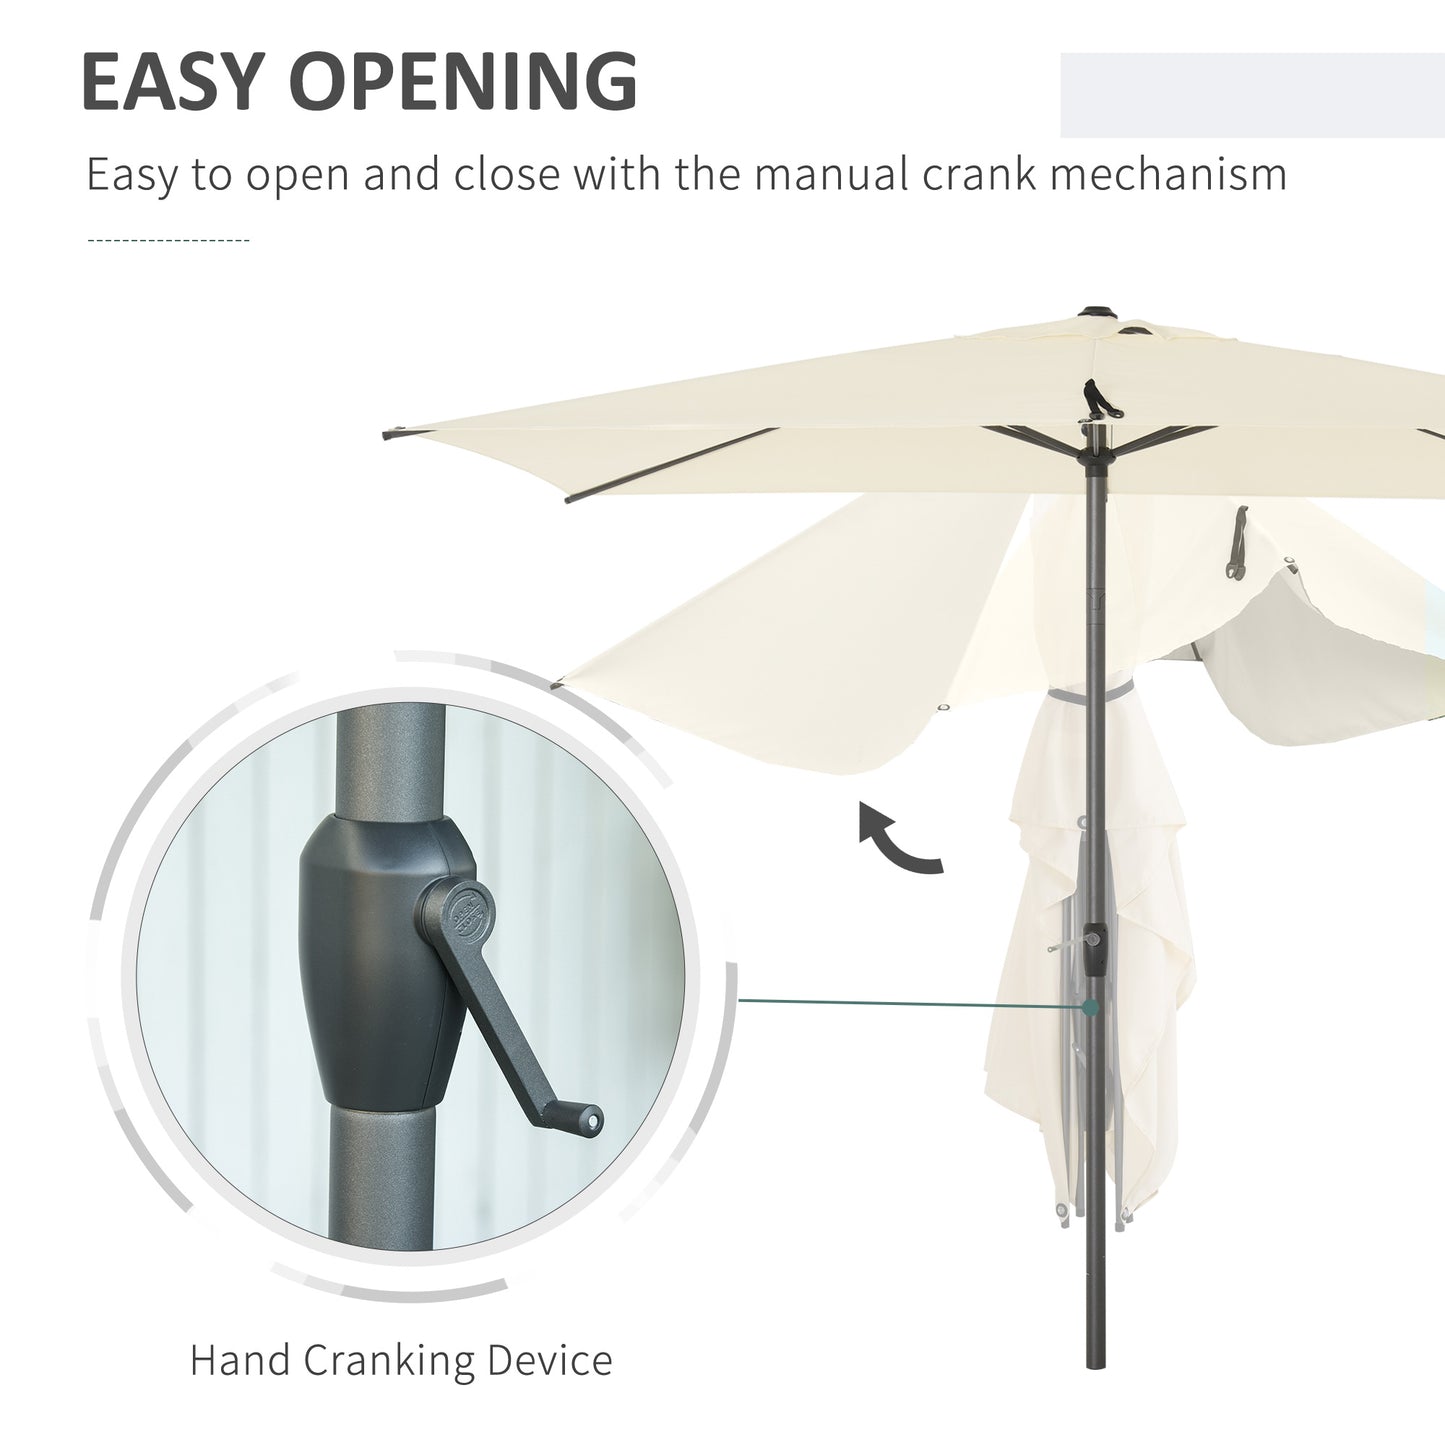 Outsunny Garden Sun Umbrella Patio Parasol w/ Tilt Crank Adjustable Angle 3 x 2m Beige